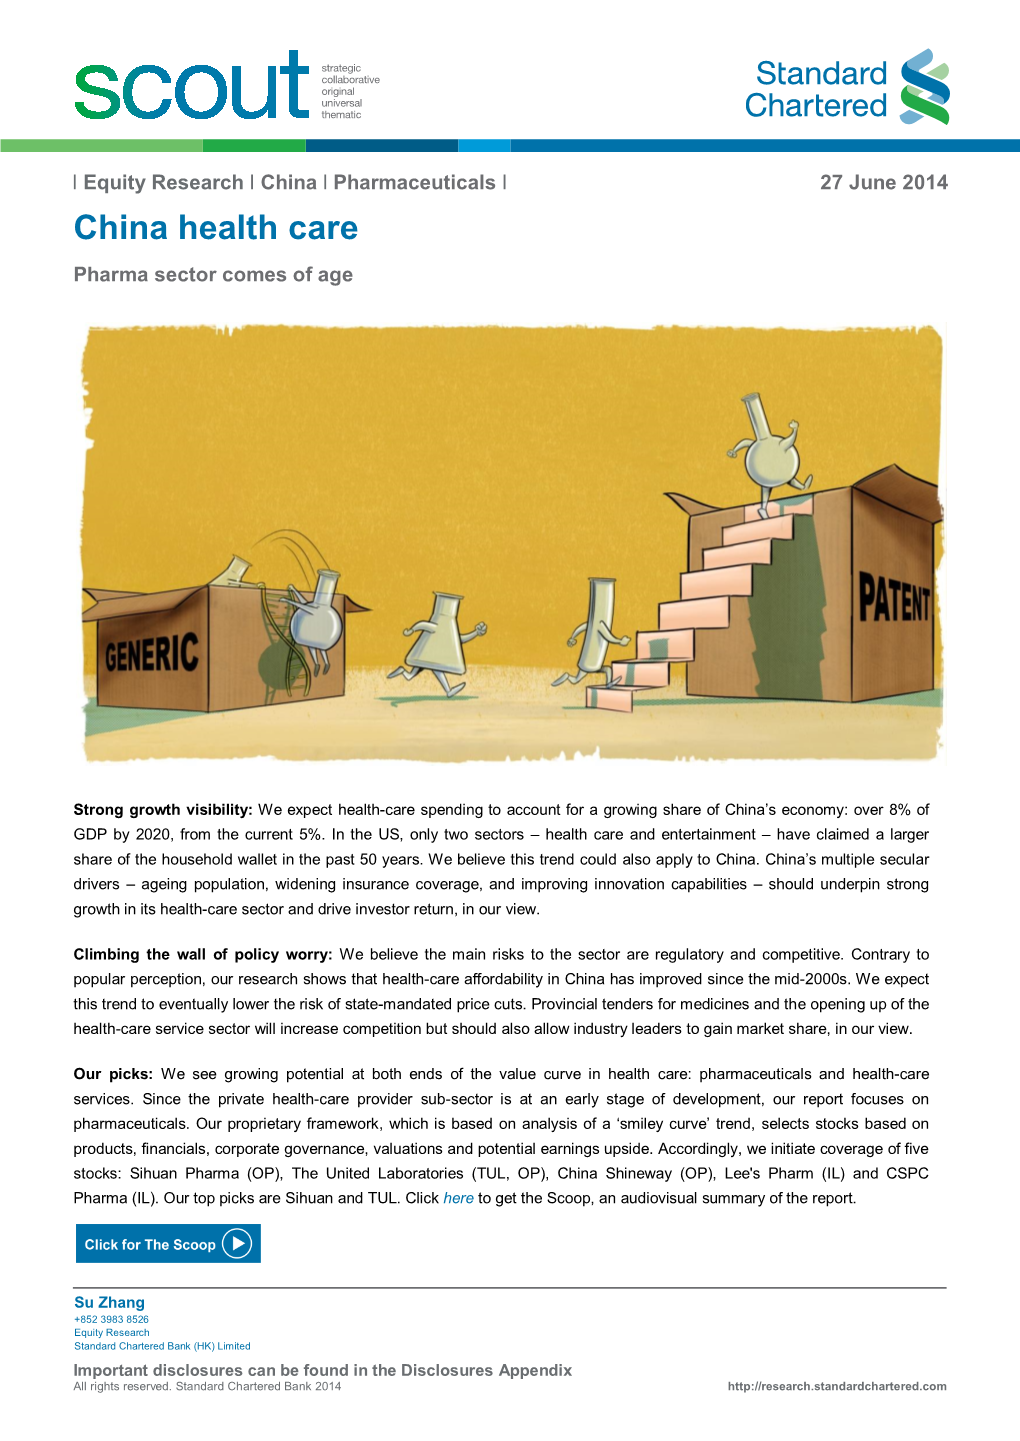 China Health Care Pharma Sector Comes of Age